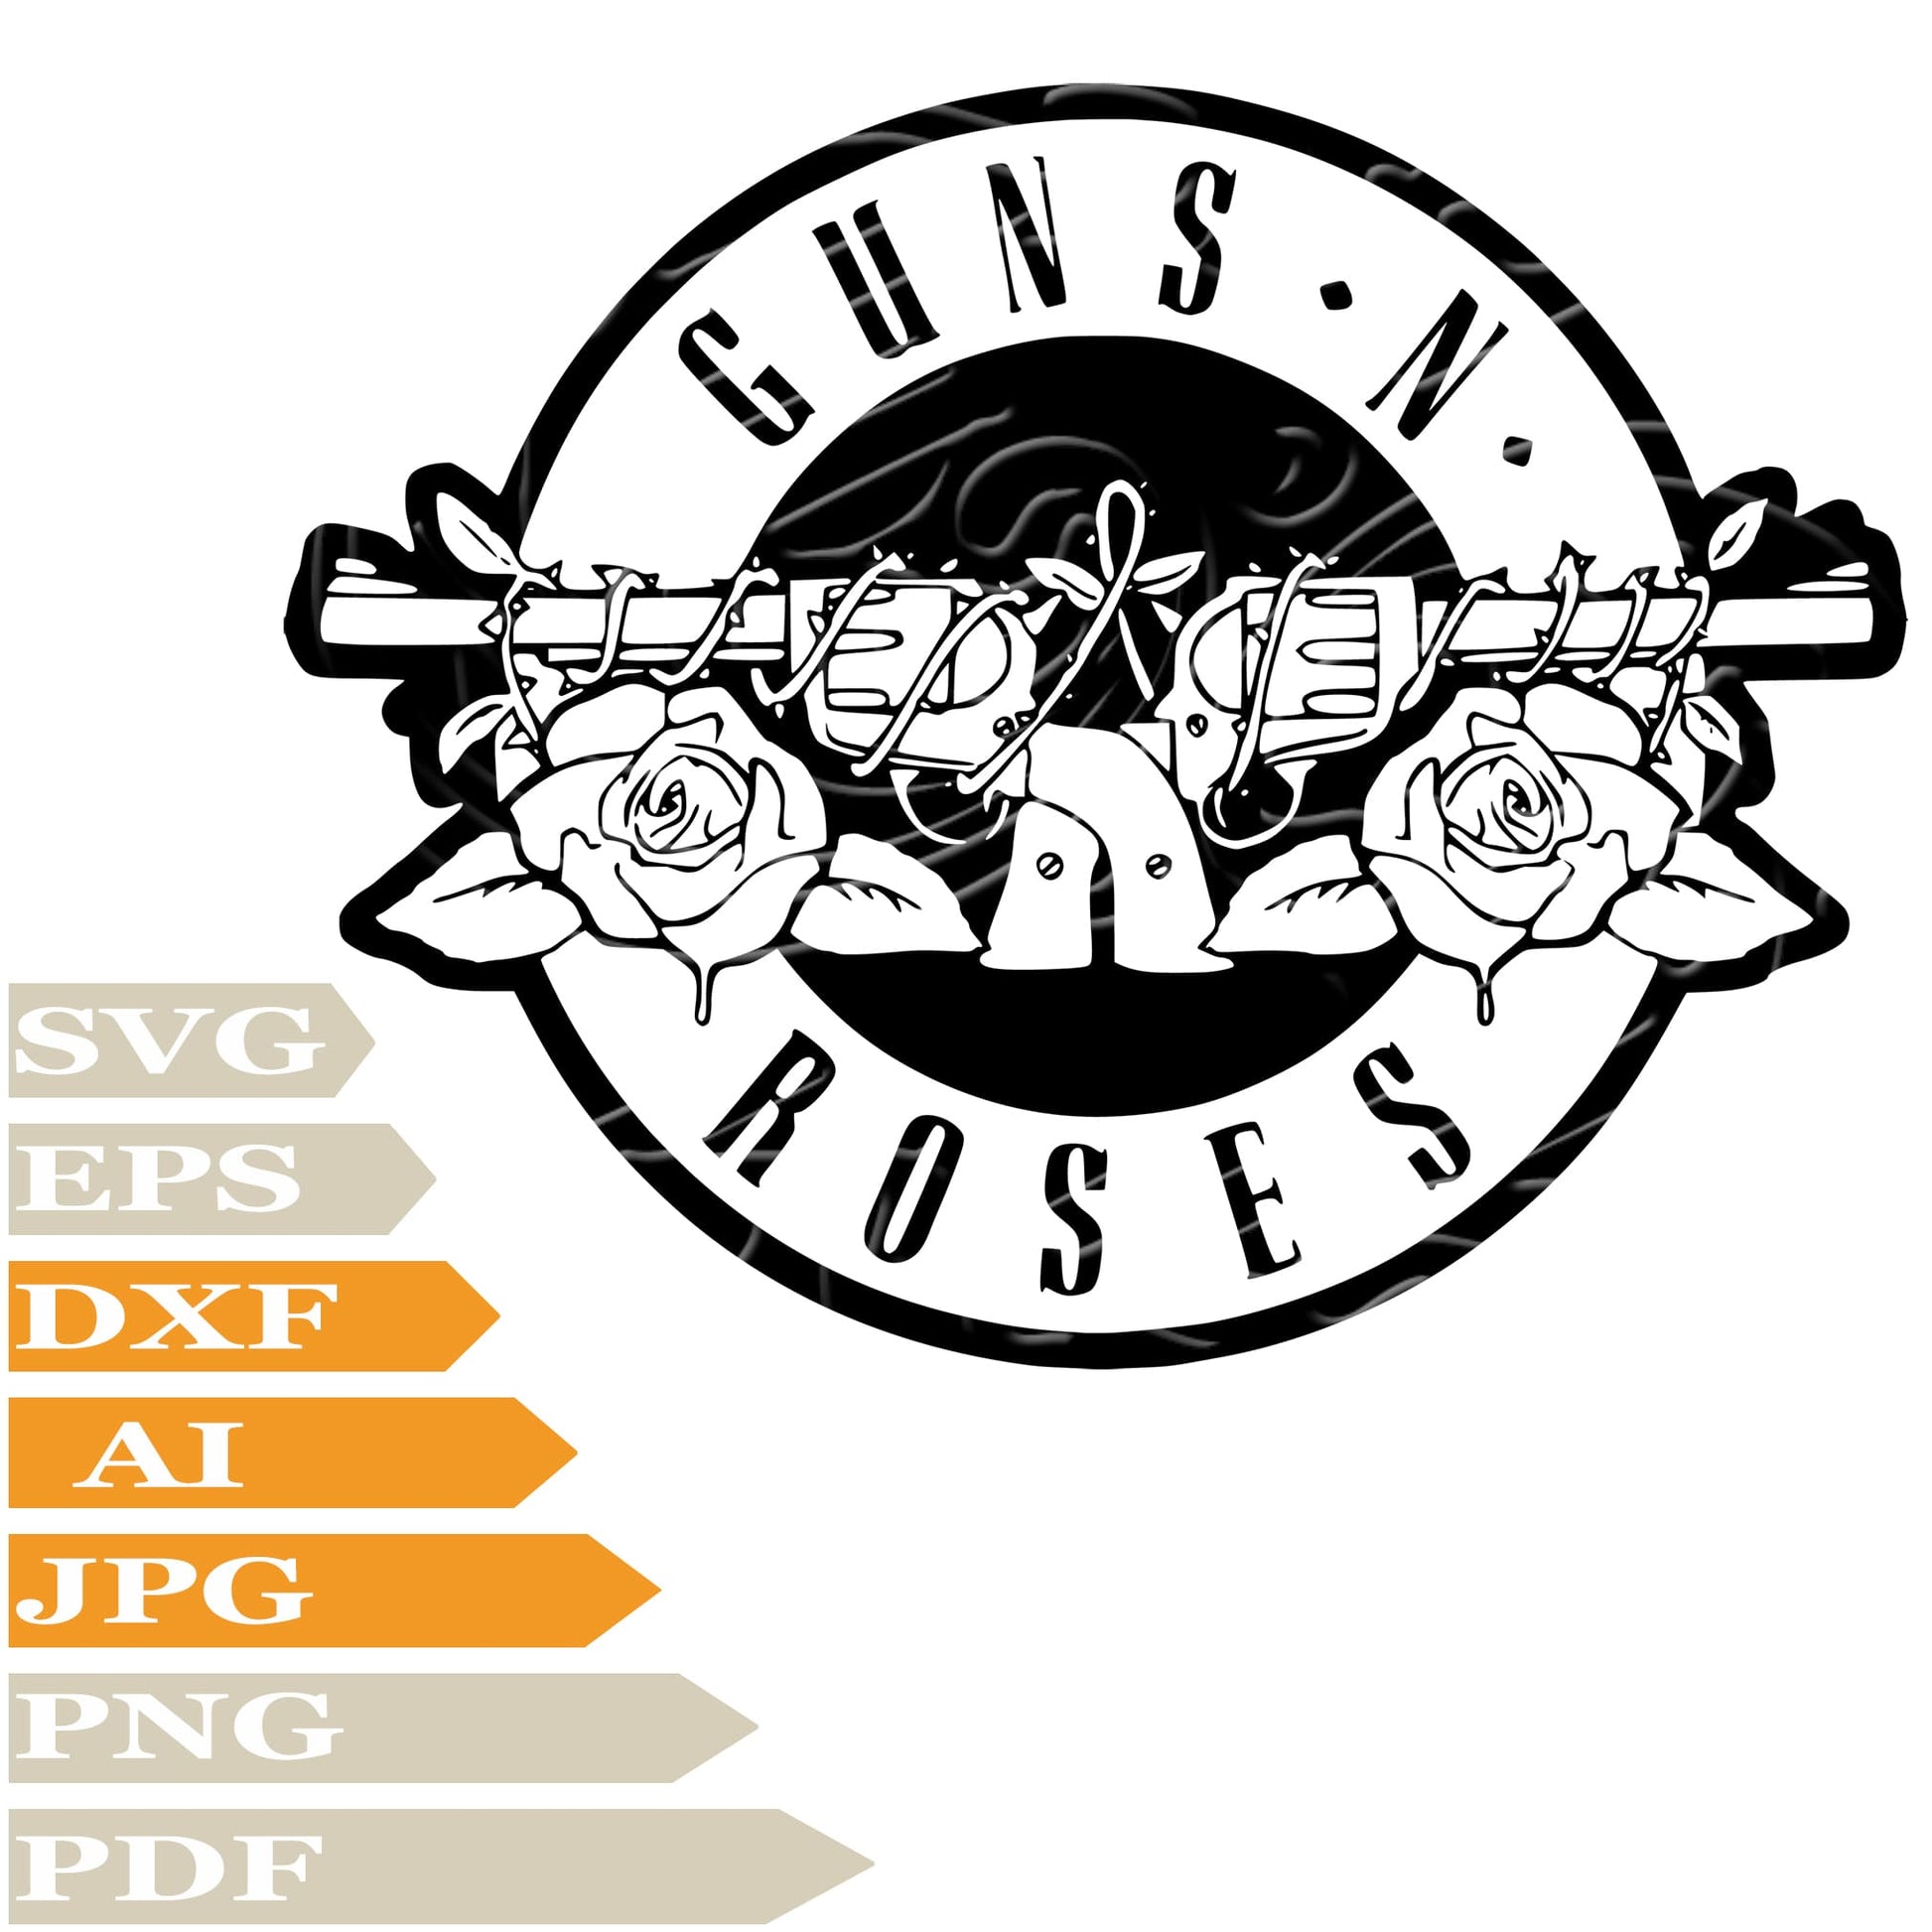 Guns N' Roses, Guns N' Roses Logo Svg File, Image Cut, Png, For Tattoo, Silhouette, Digital Vector Download, Cut File, Clipart, For Cricut